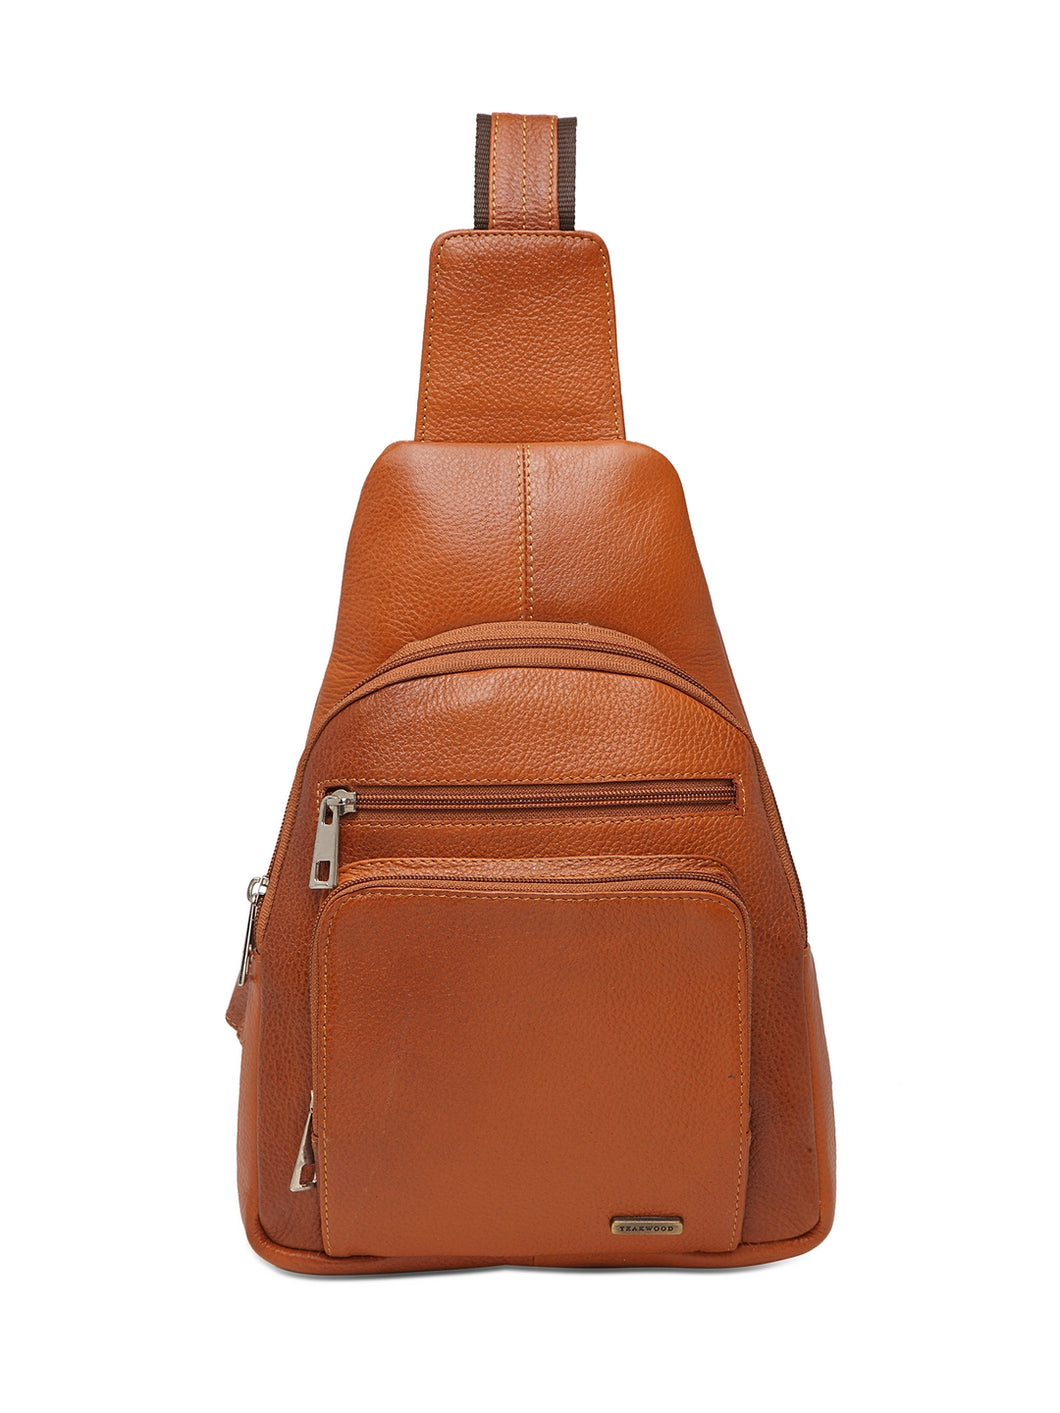 Teakwood Genuine Leather Cross Body Sling Messenger Bag || Lightweight Backpack Chest Shoulder Bags for Travelling, Hiking, Cycling (Tan)